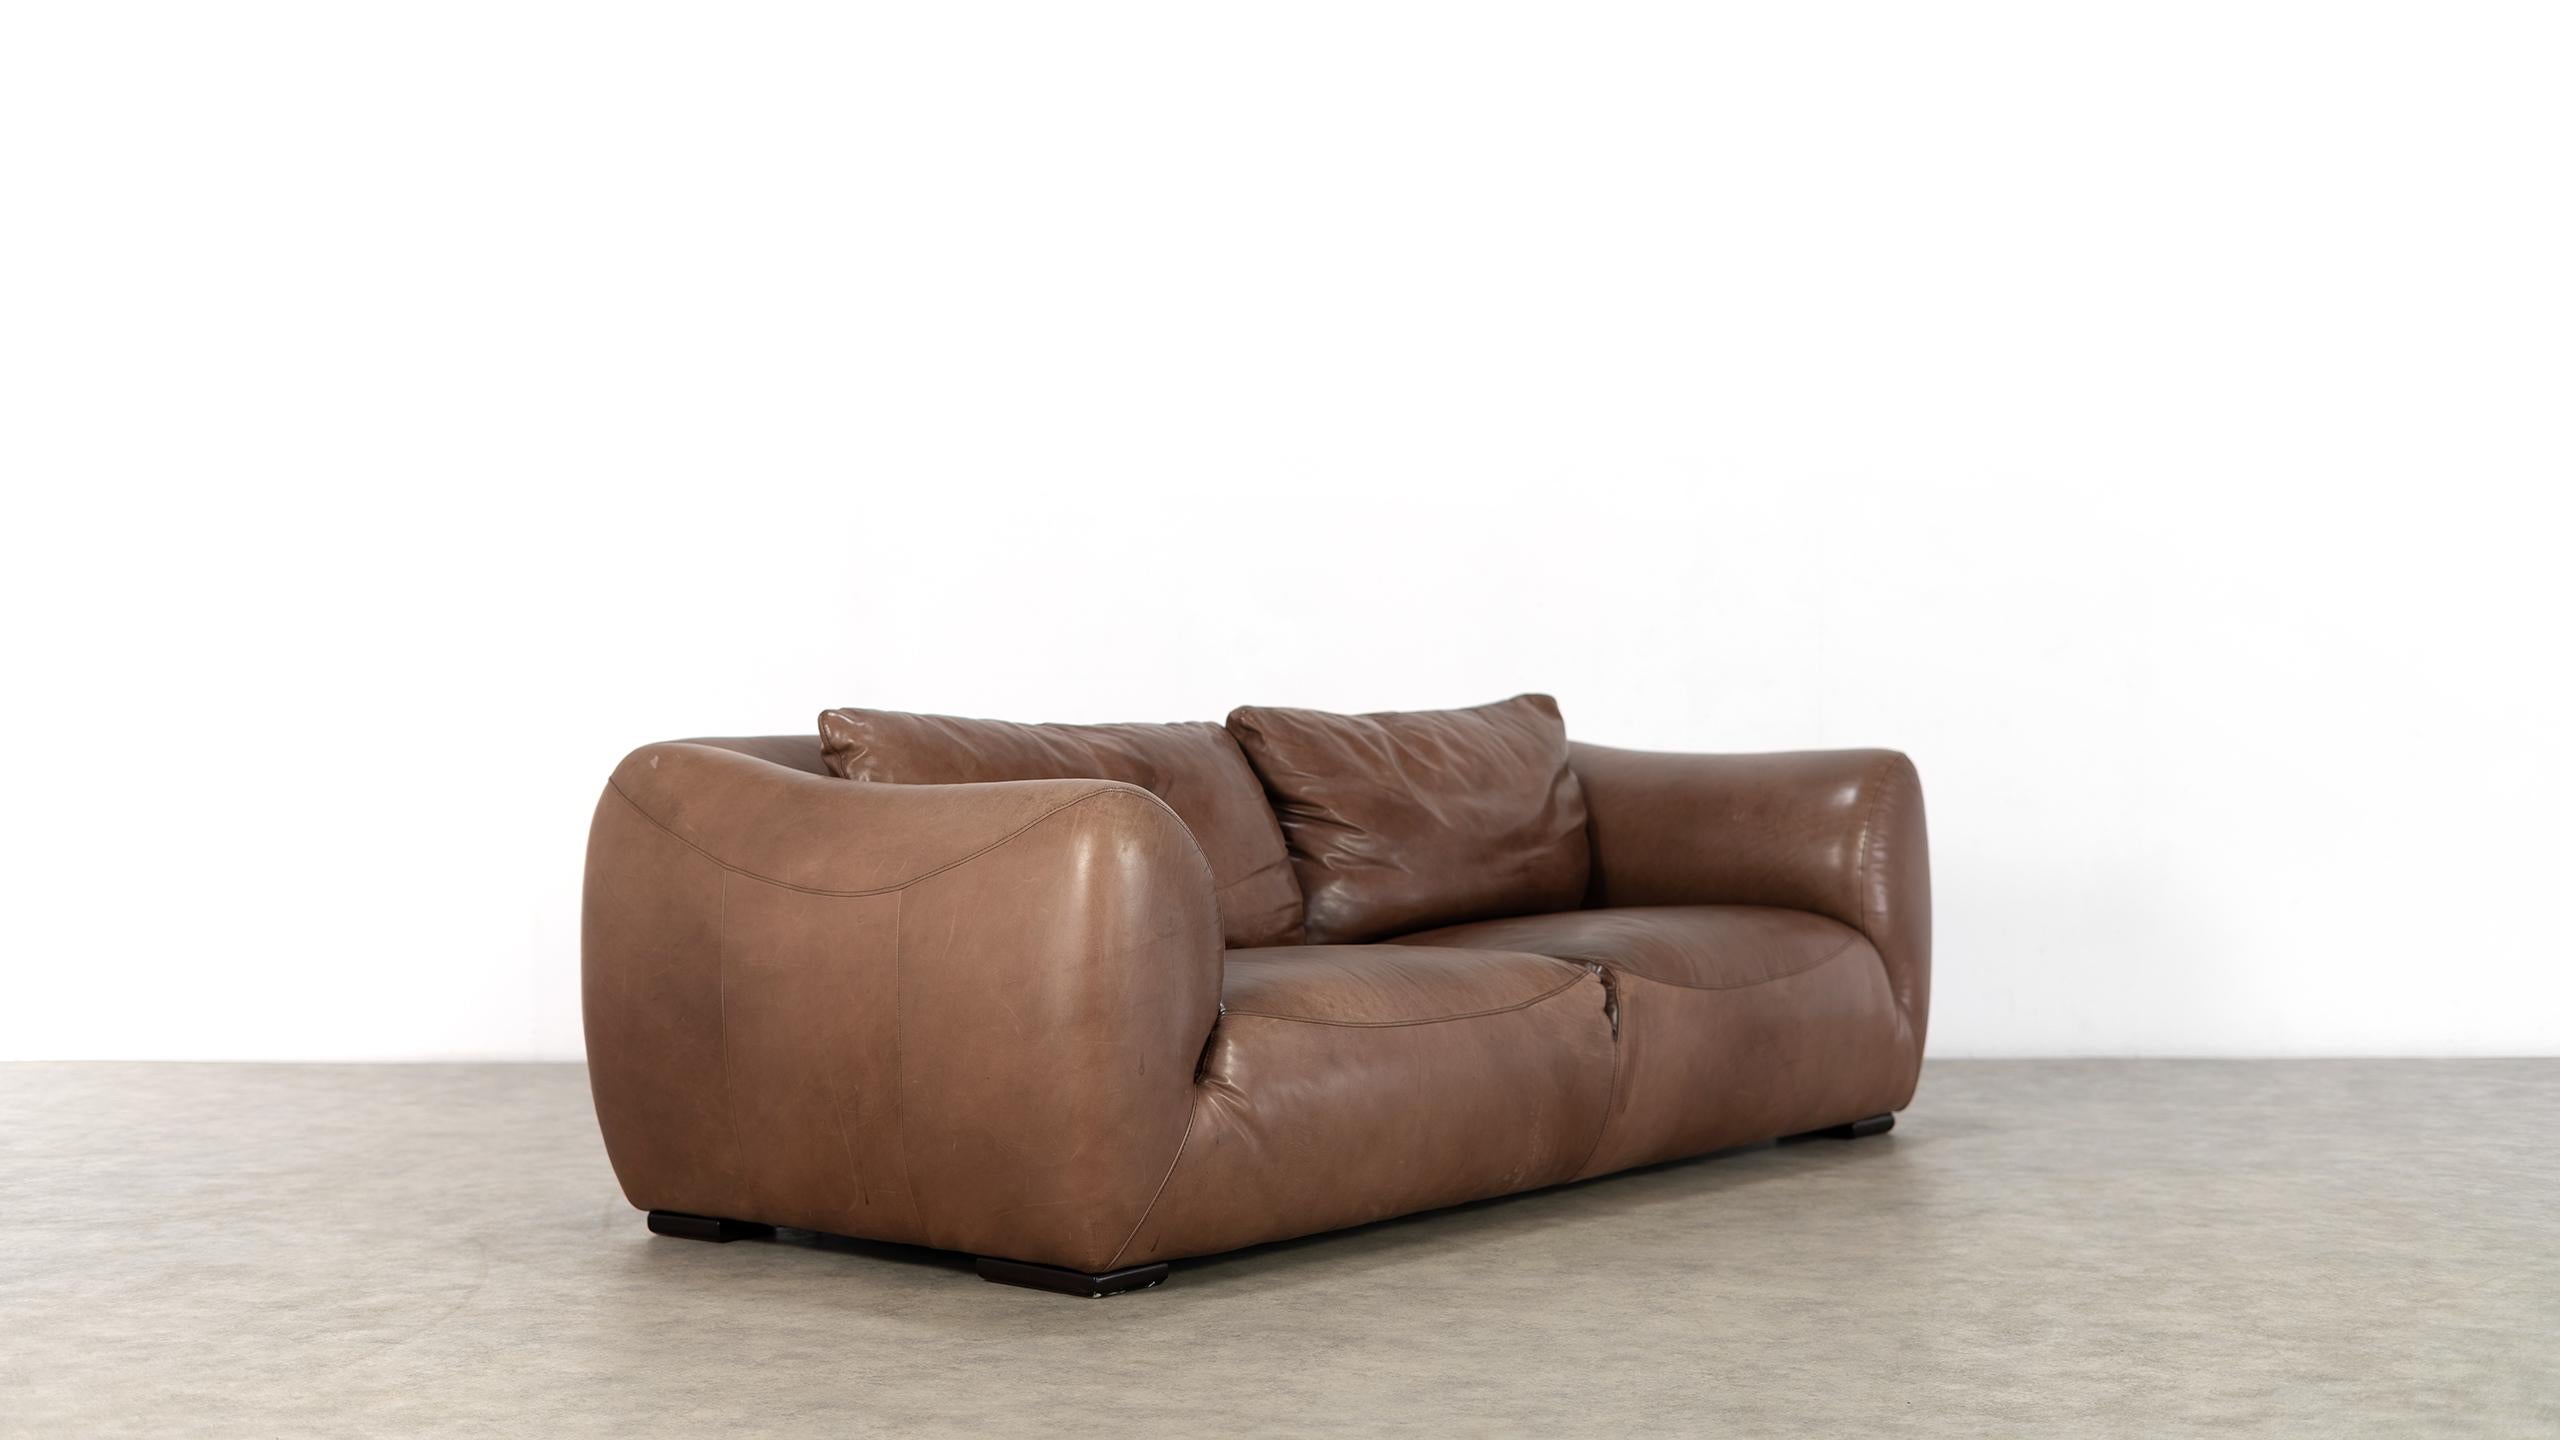 Gerard van den Berg 'attr. to', Sofa in Chocolate Leather, 1970 Netherlands 4